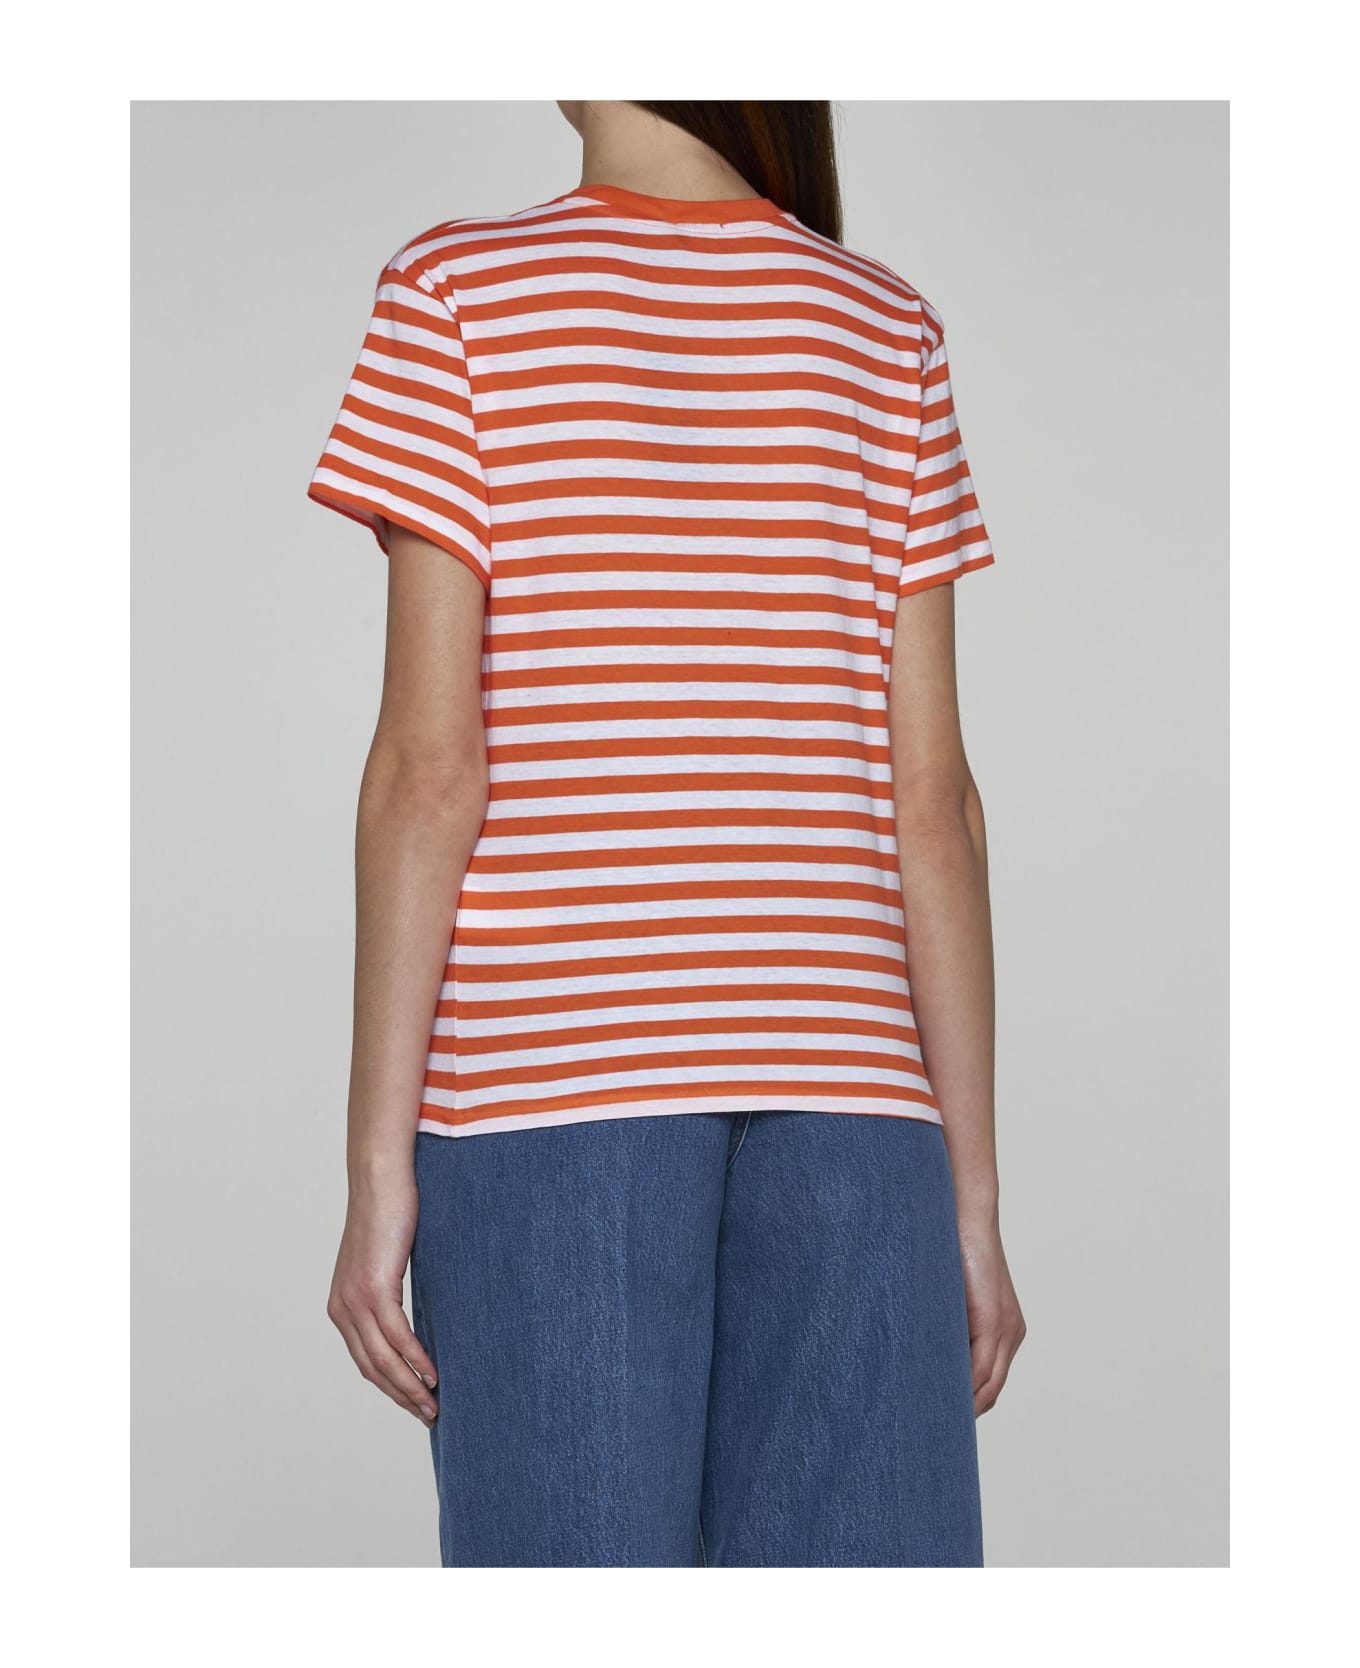 Polo Ralph Lauren Striped Cotton T-shirt - Orange